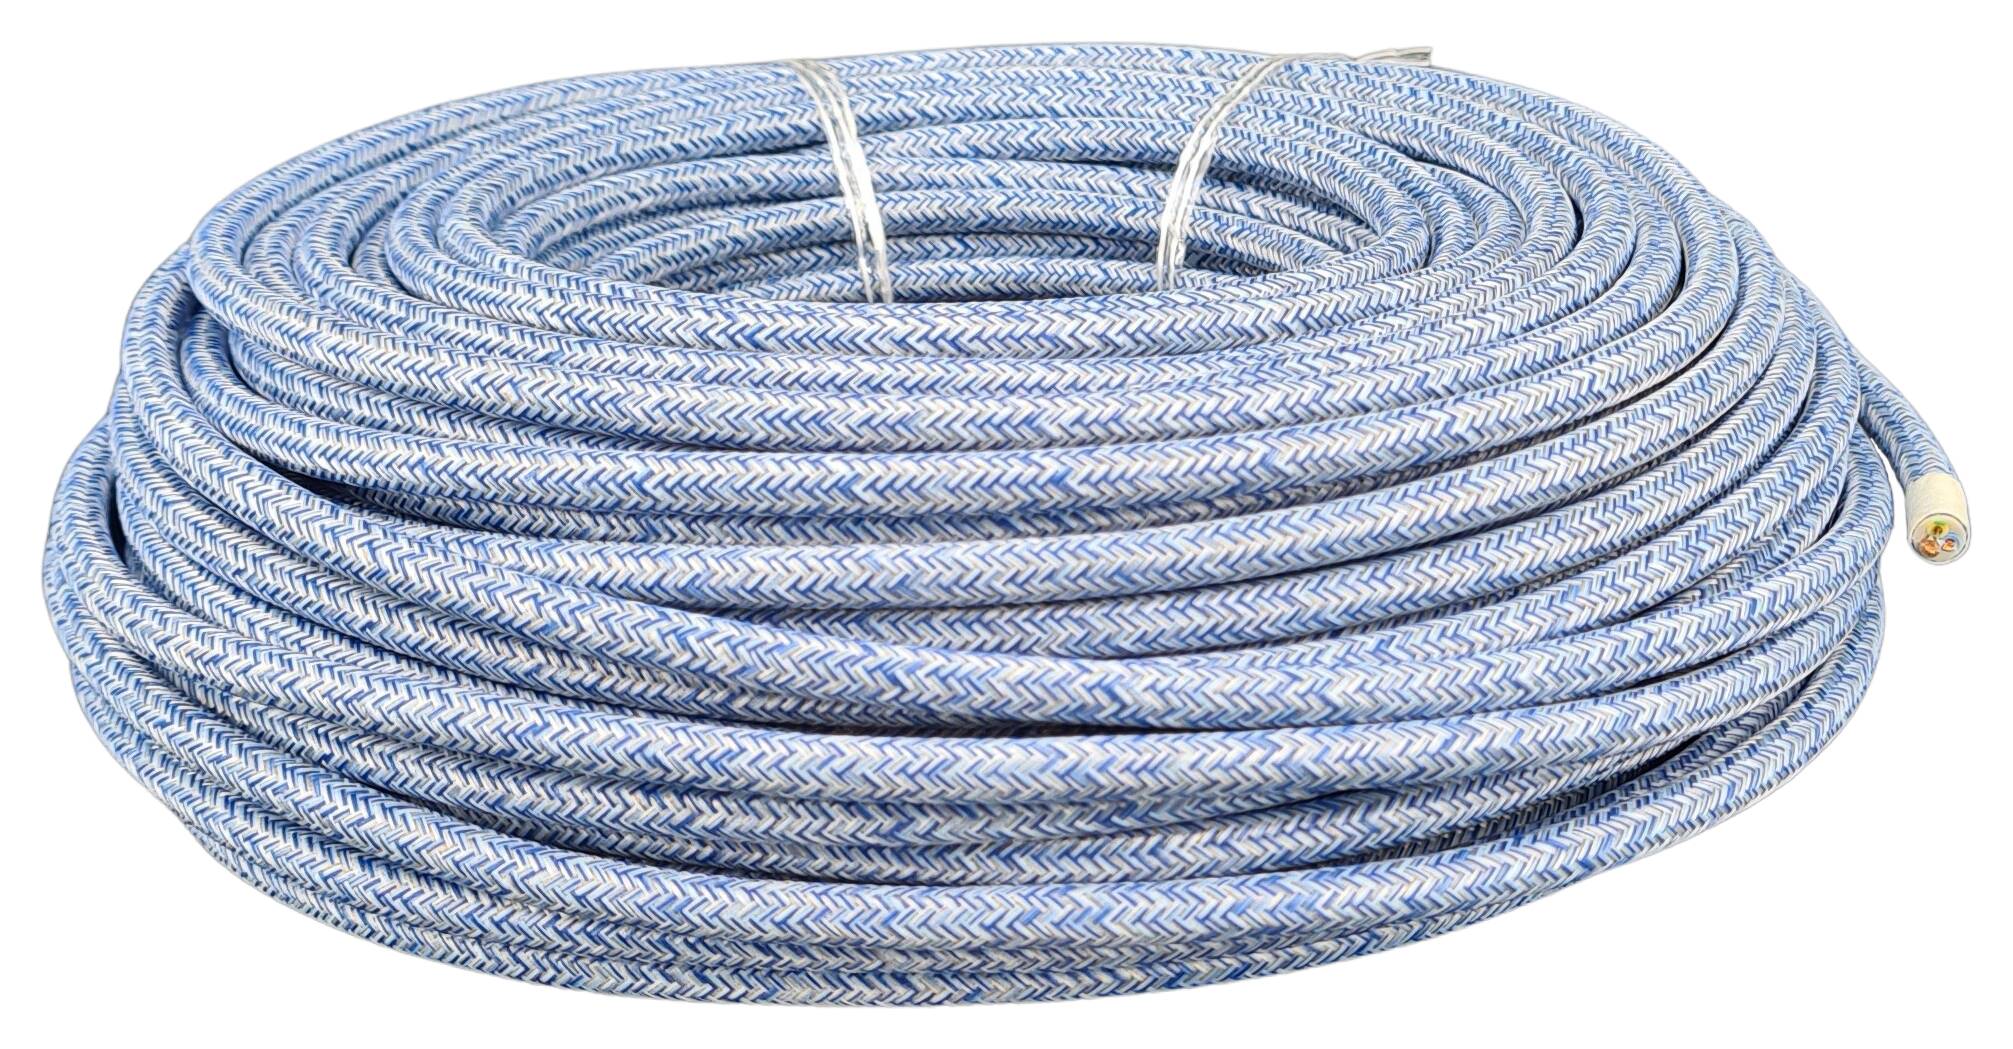 Kabel 3G 0,75 H03VV-F textilummantelt melange hellblau-dunkelblau (bluejeans)